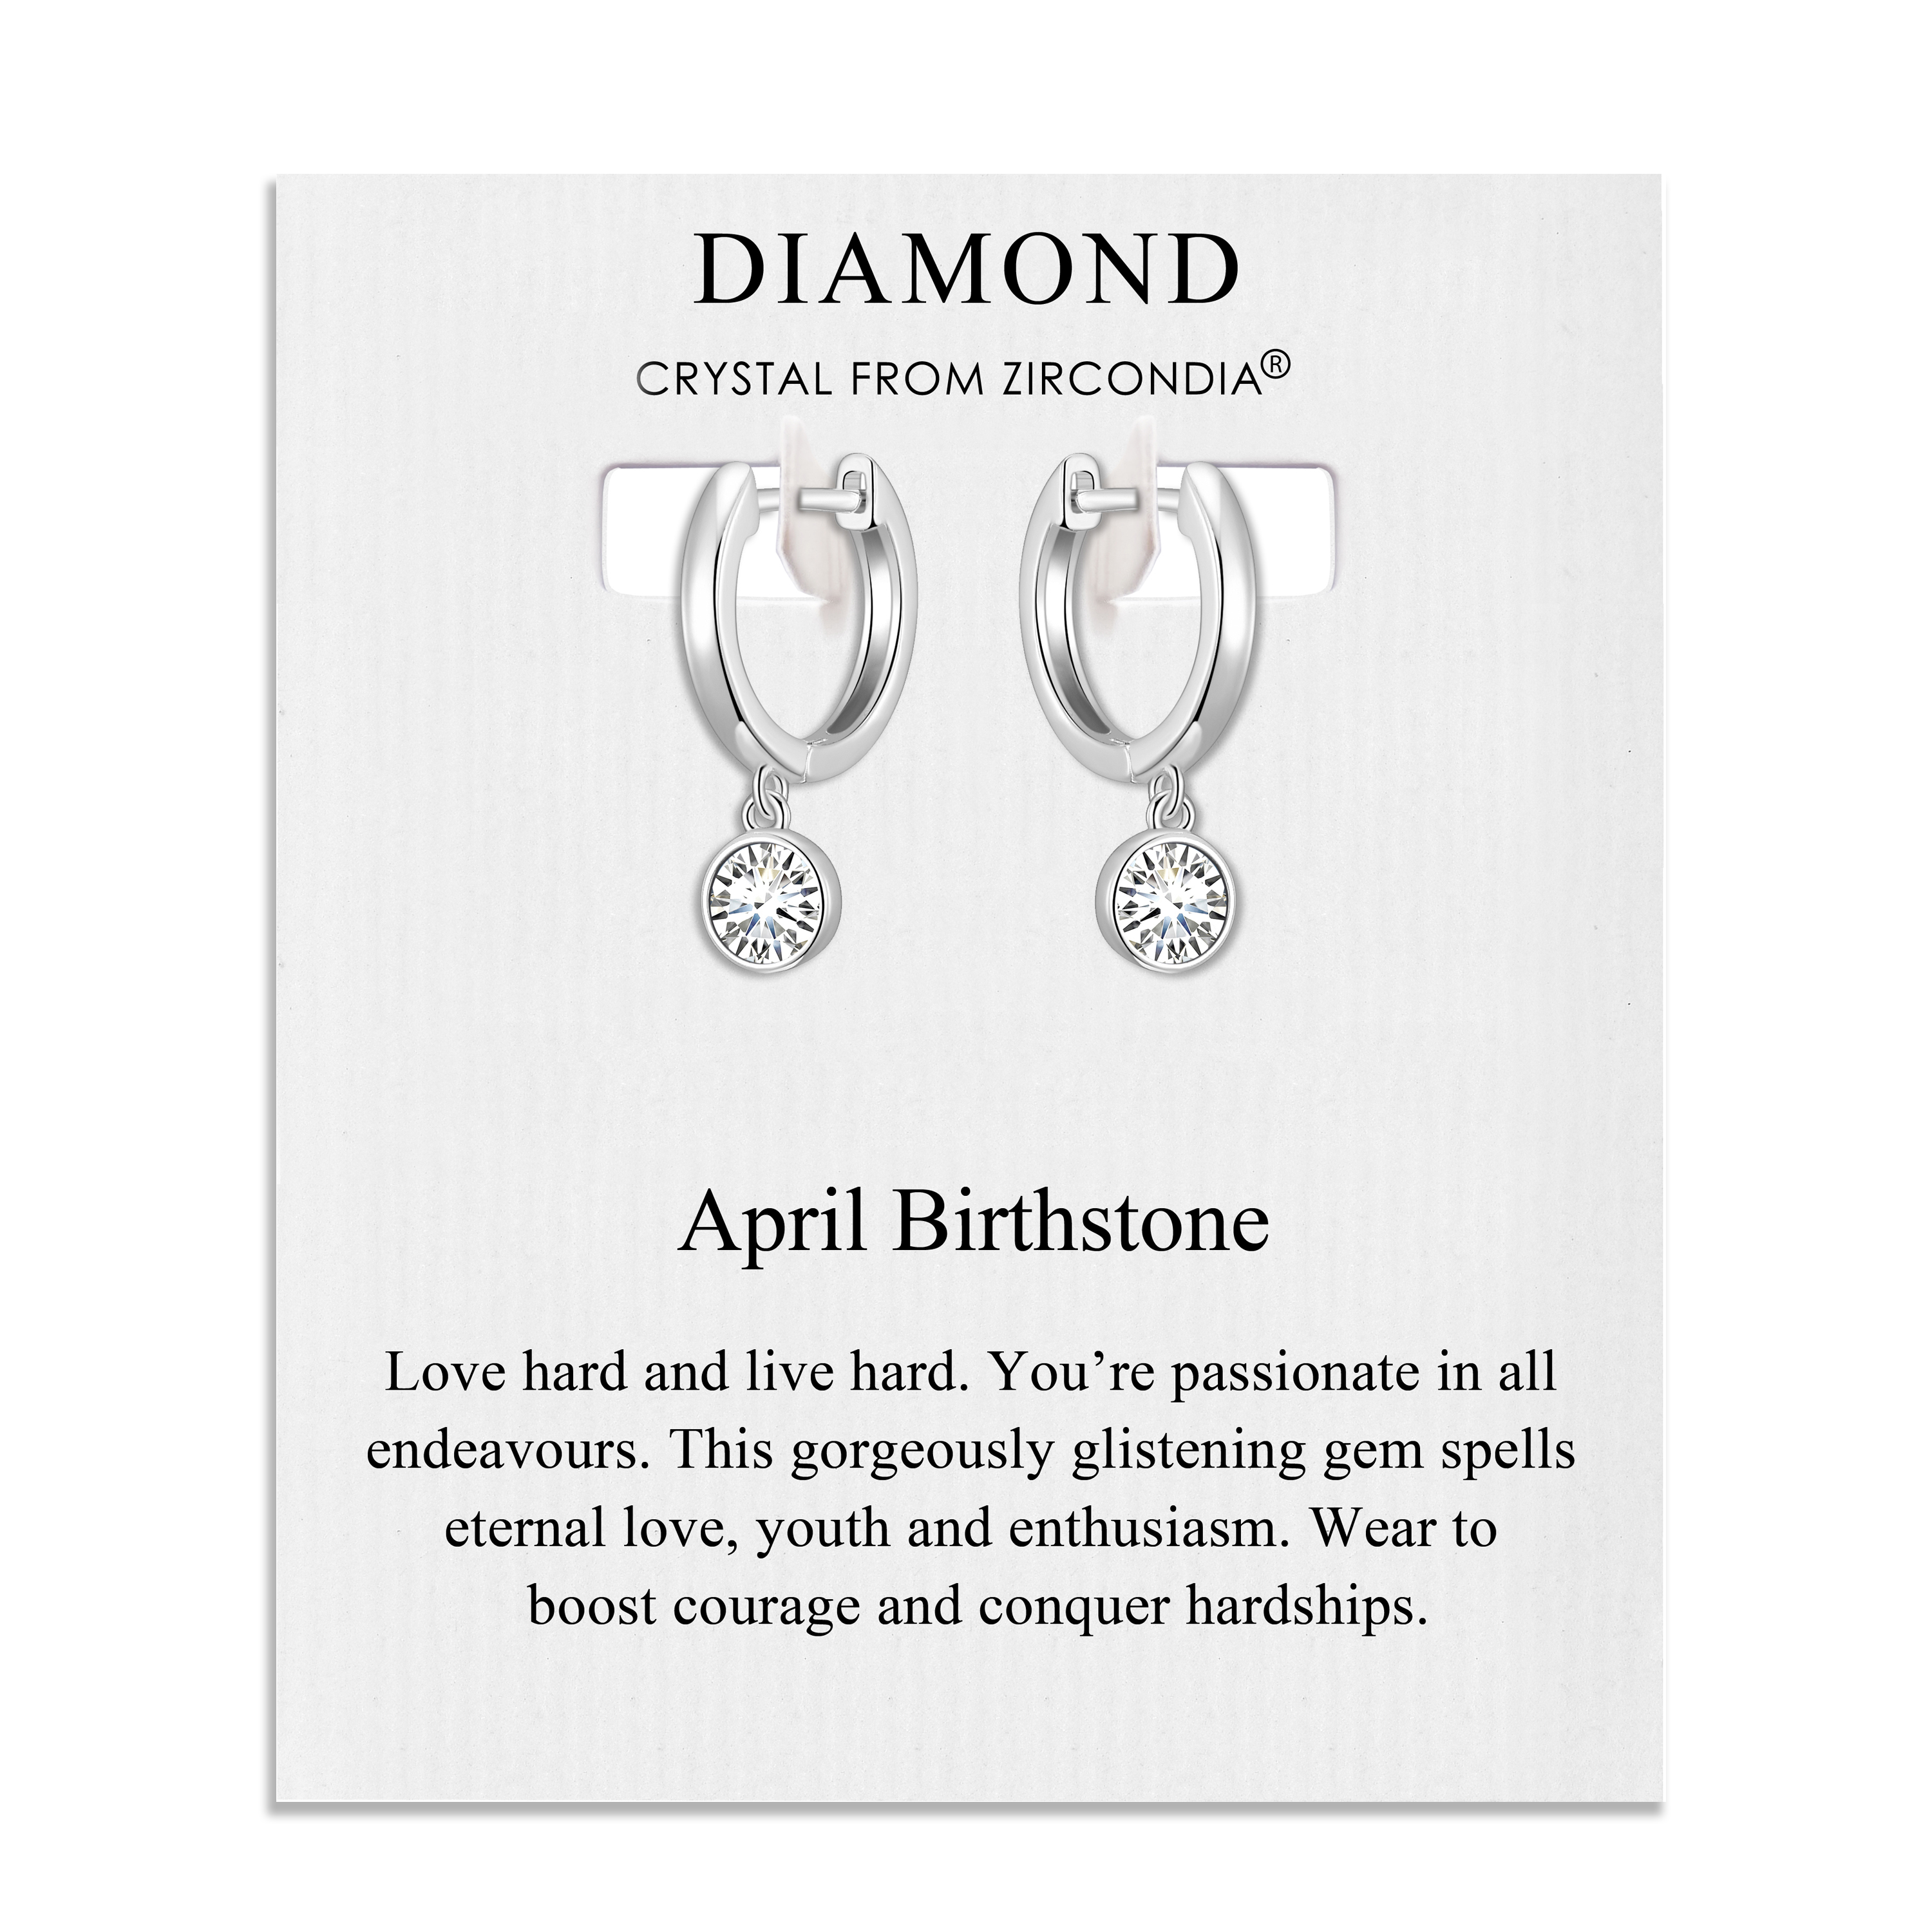 April Birthstone Hoop Earrings Created with Diamond Zircondia® Crystals by Philip Jones Jewellery